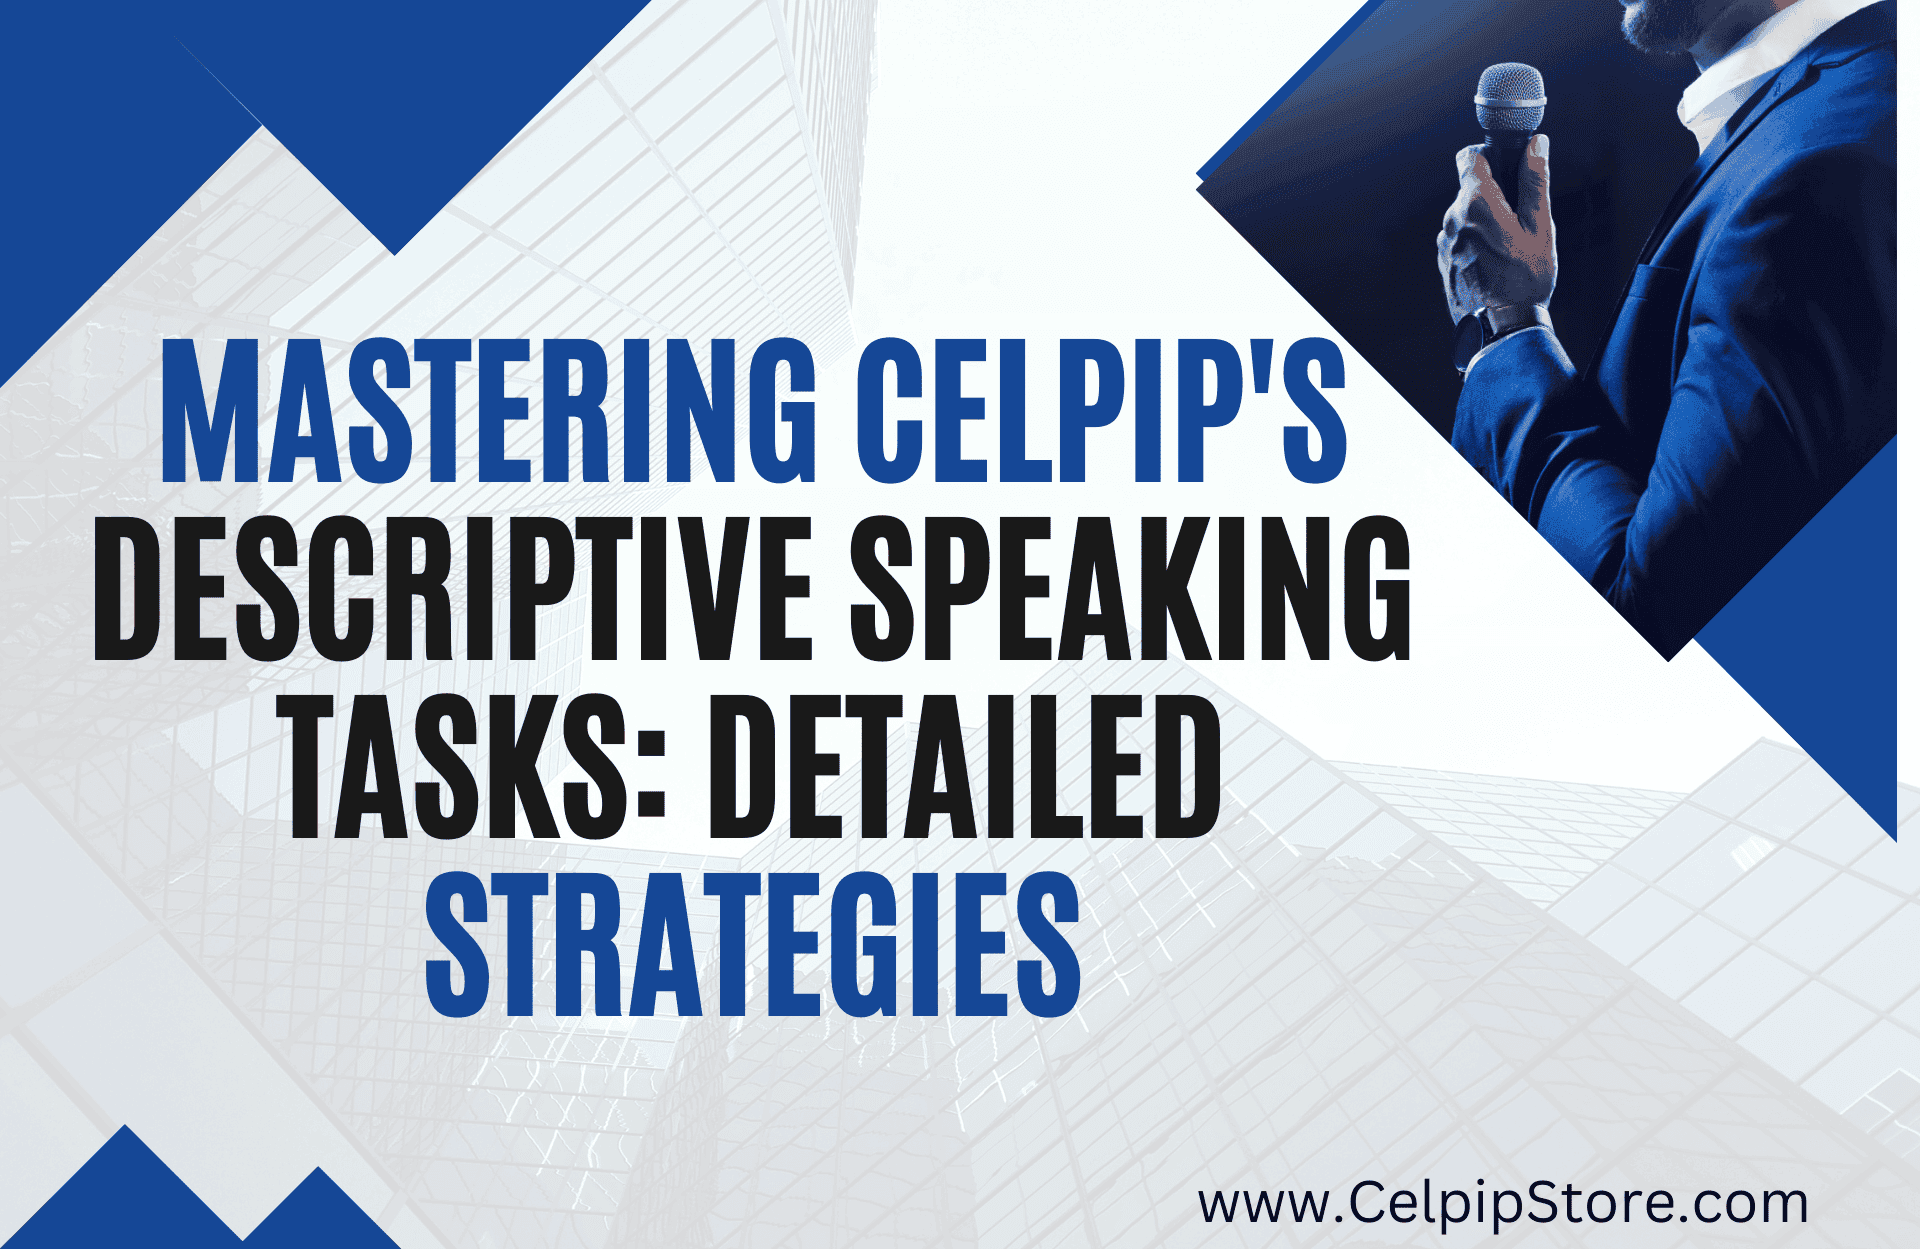 Mastering CELPIP’s Descriptive Speaking Tasks: Detailed Strategies